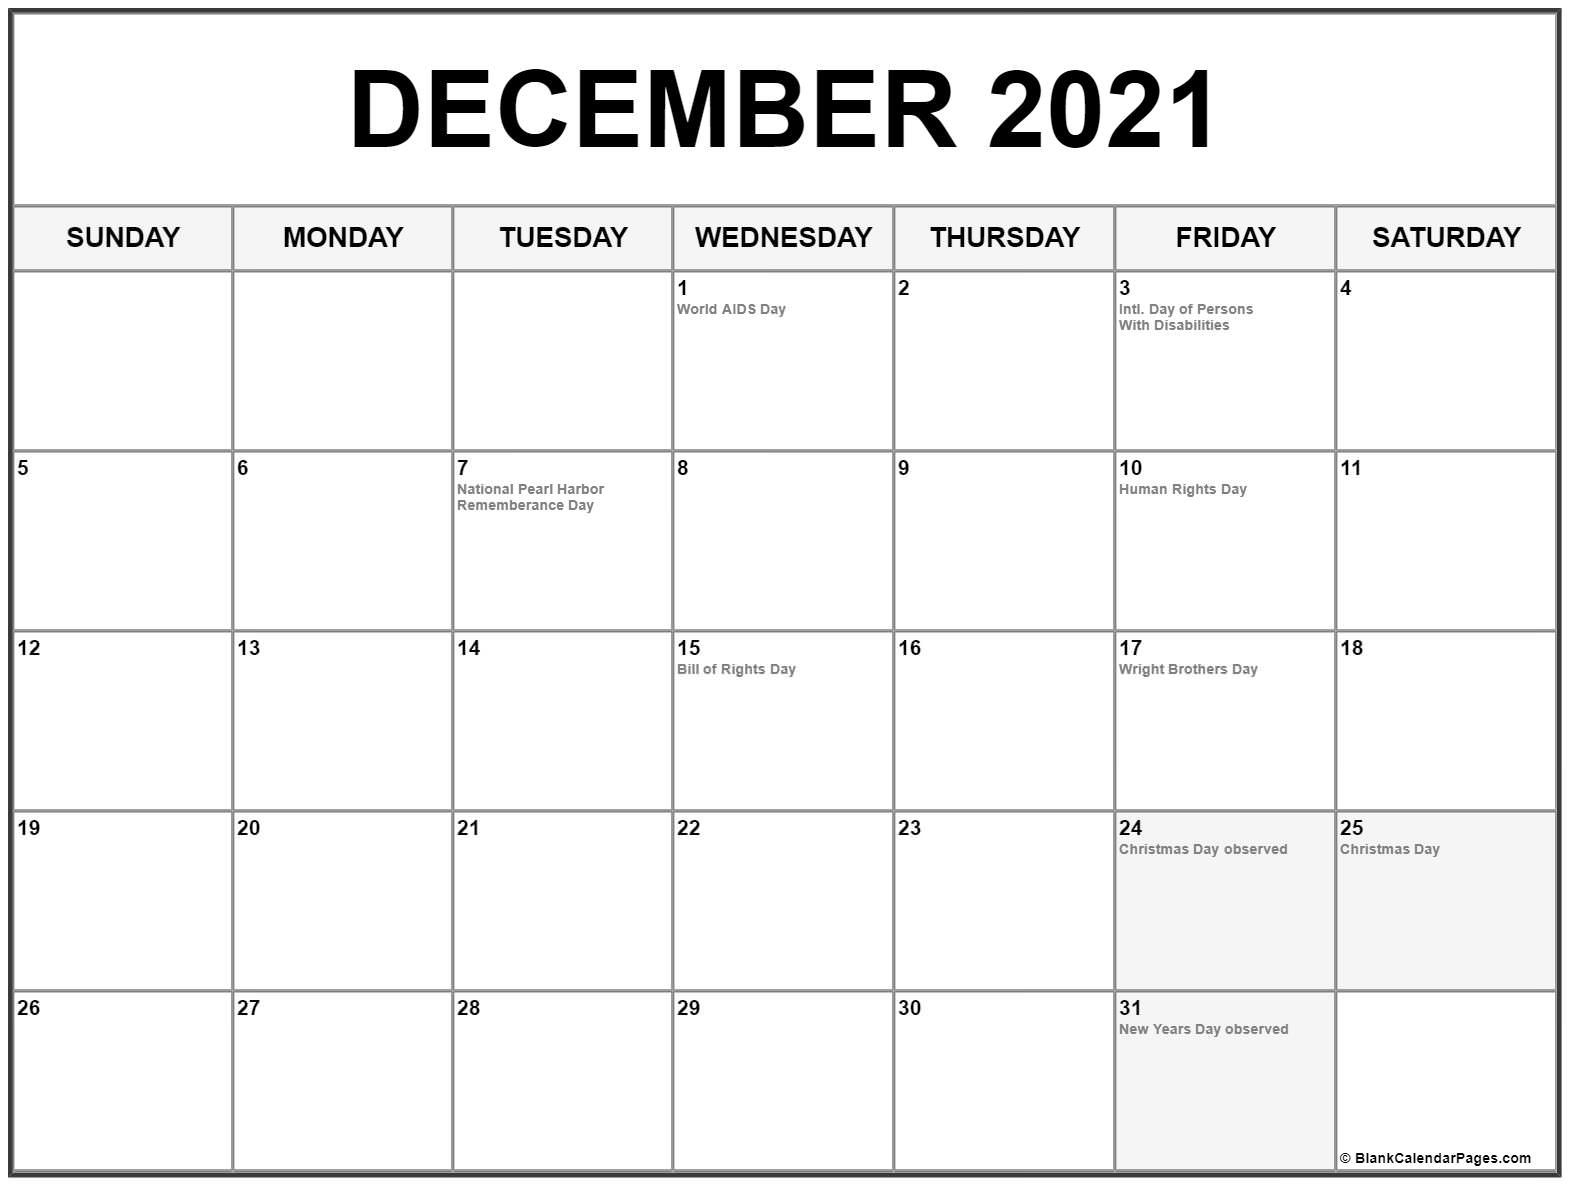 December 2021 Calendar With Holidays